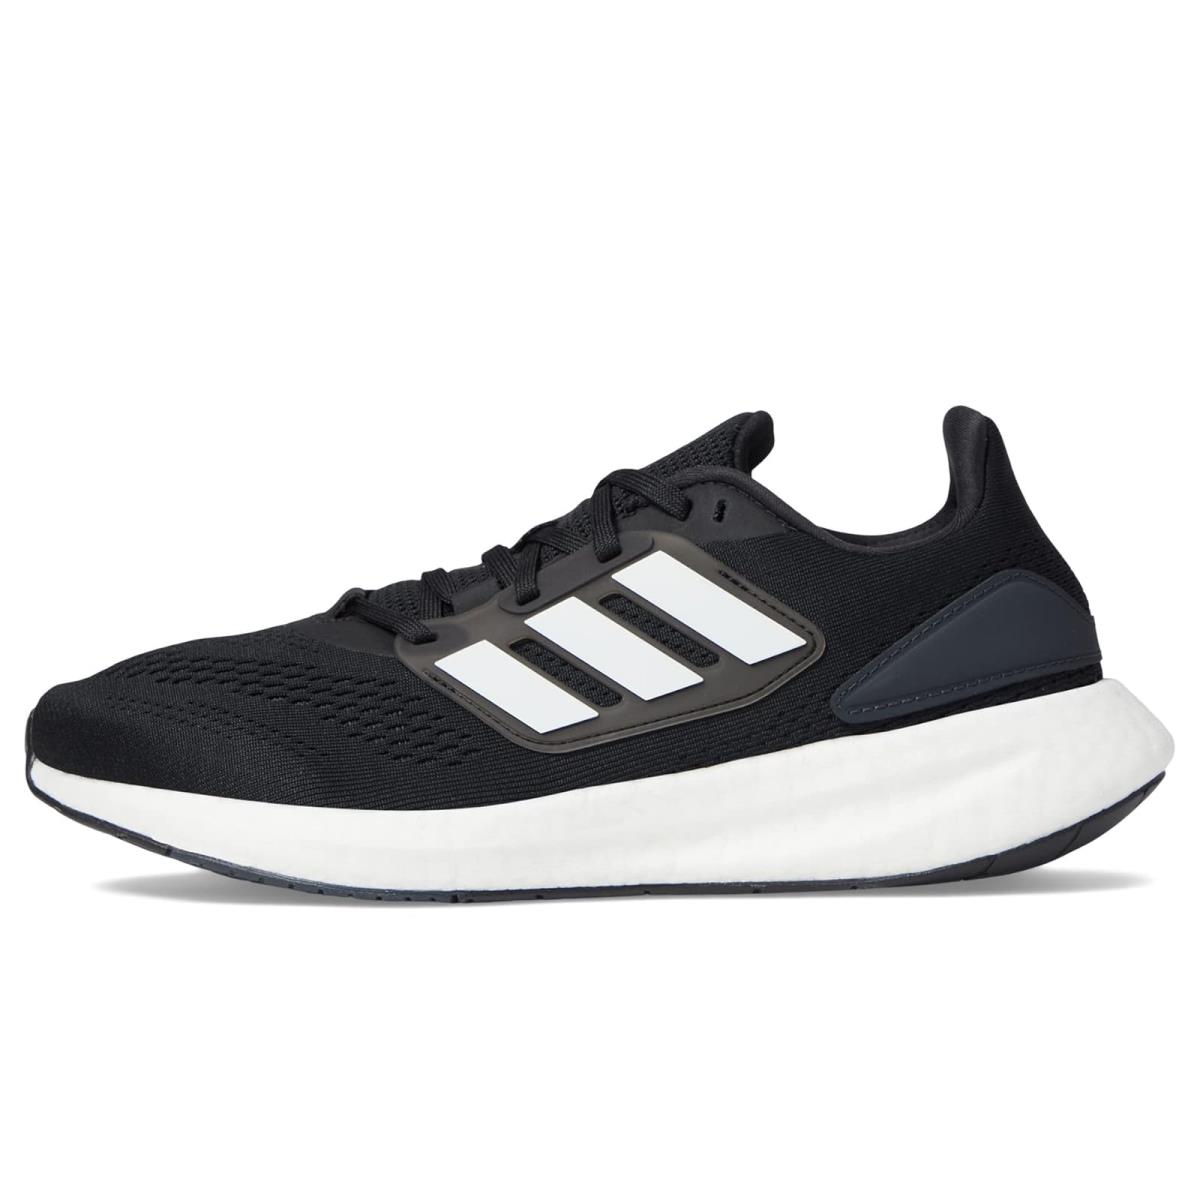 Adidas shoes  - Black/White/Carbon 2